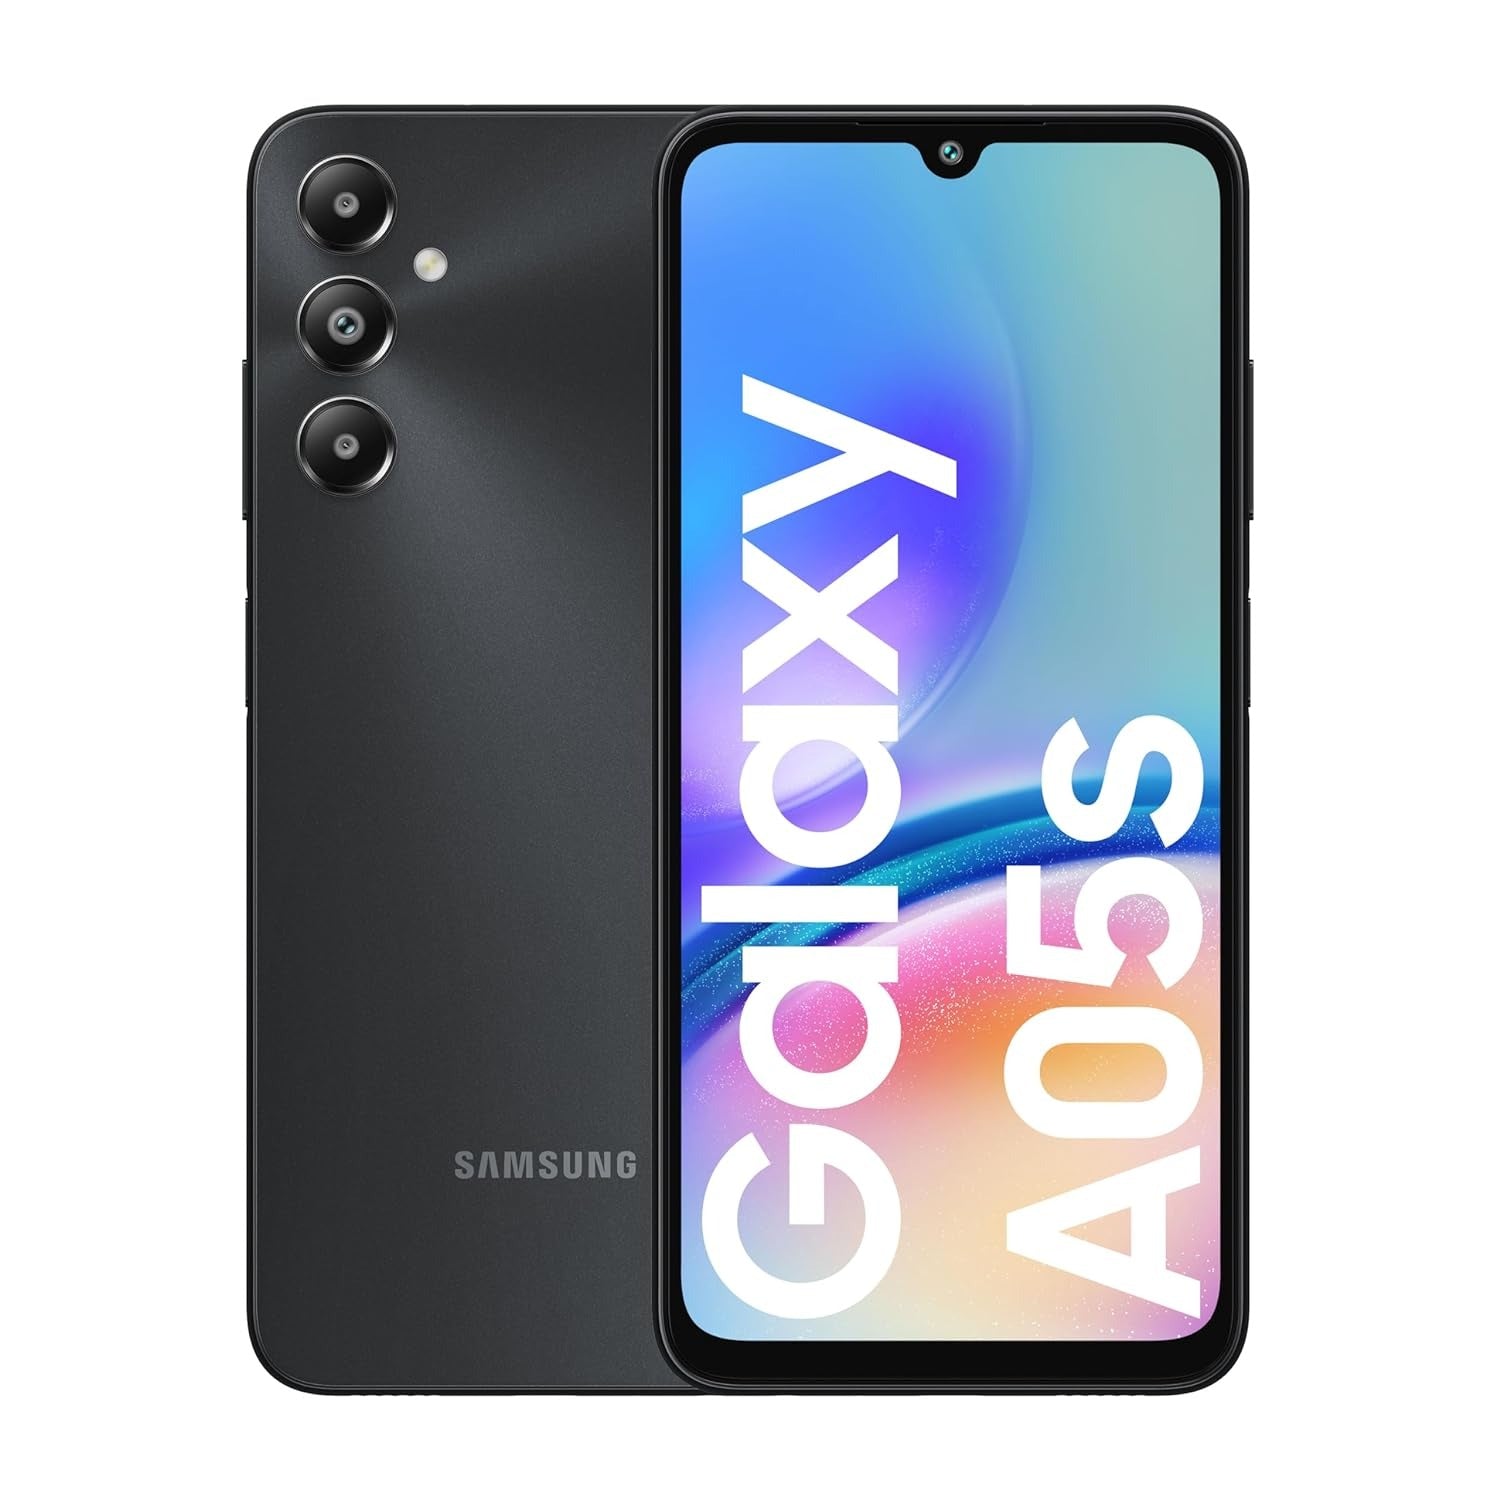 Samsung Galaxy A05s (6GB, 128GB)(Black) - BookAPhone